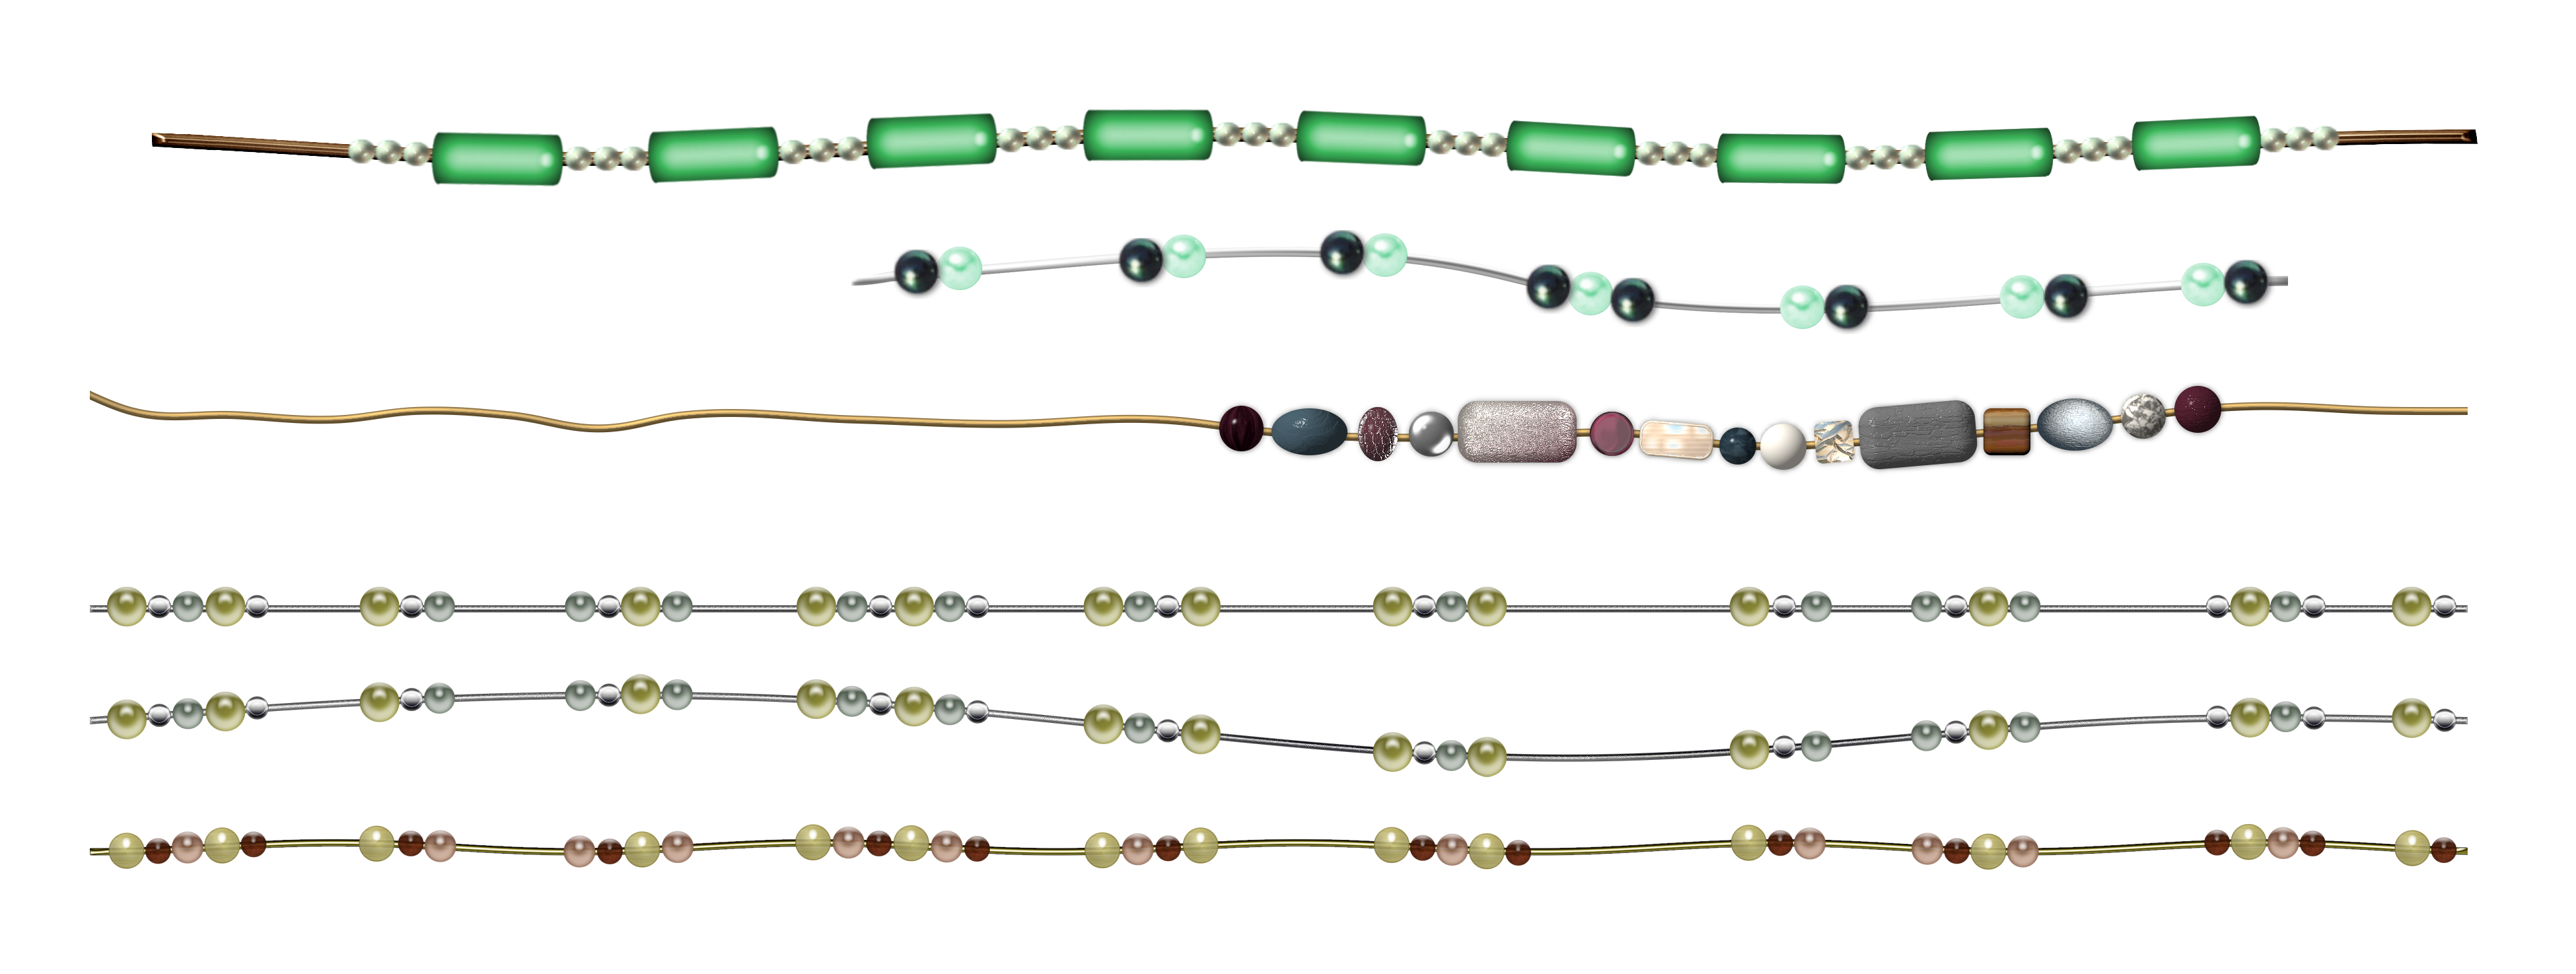 Pearl clipart string bead. U b clip art